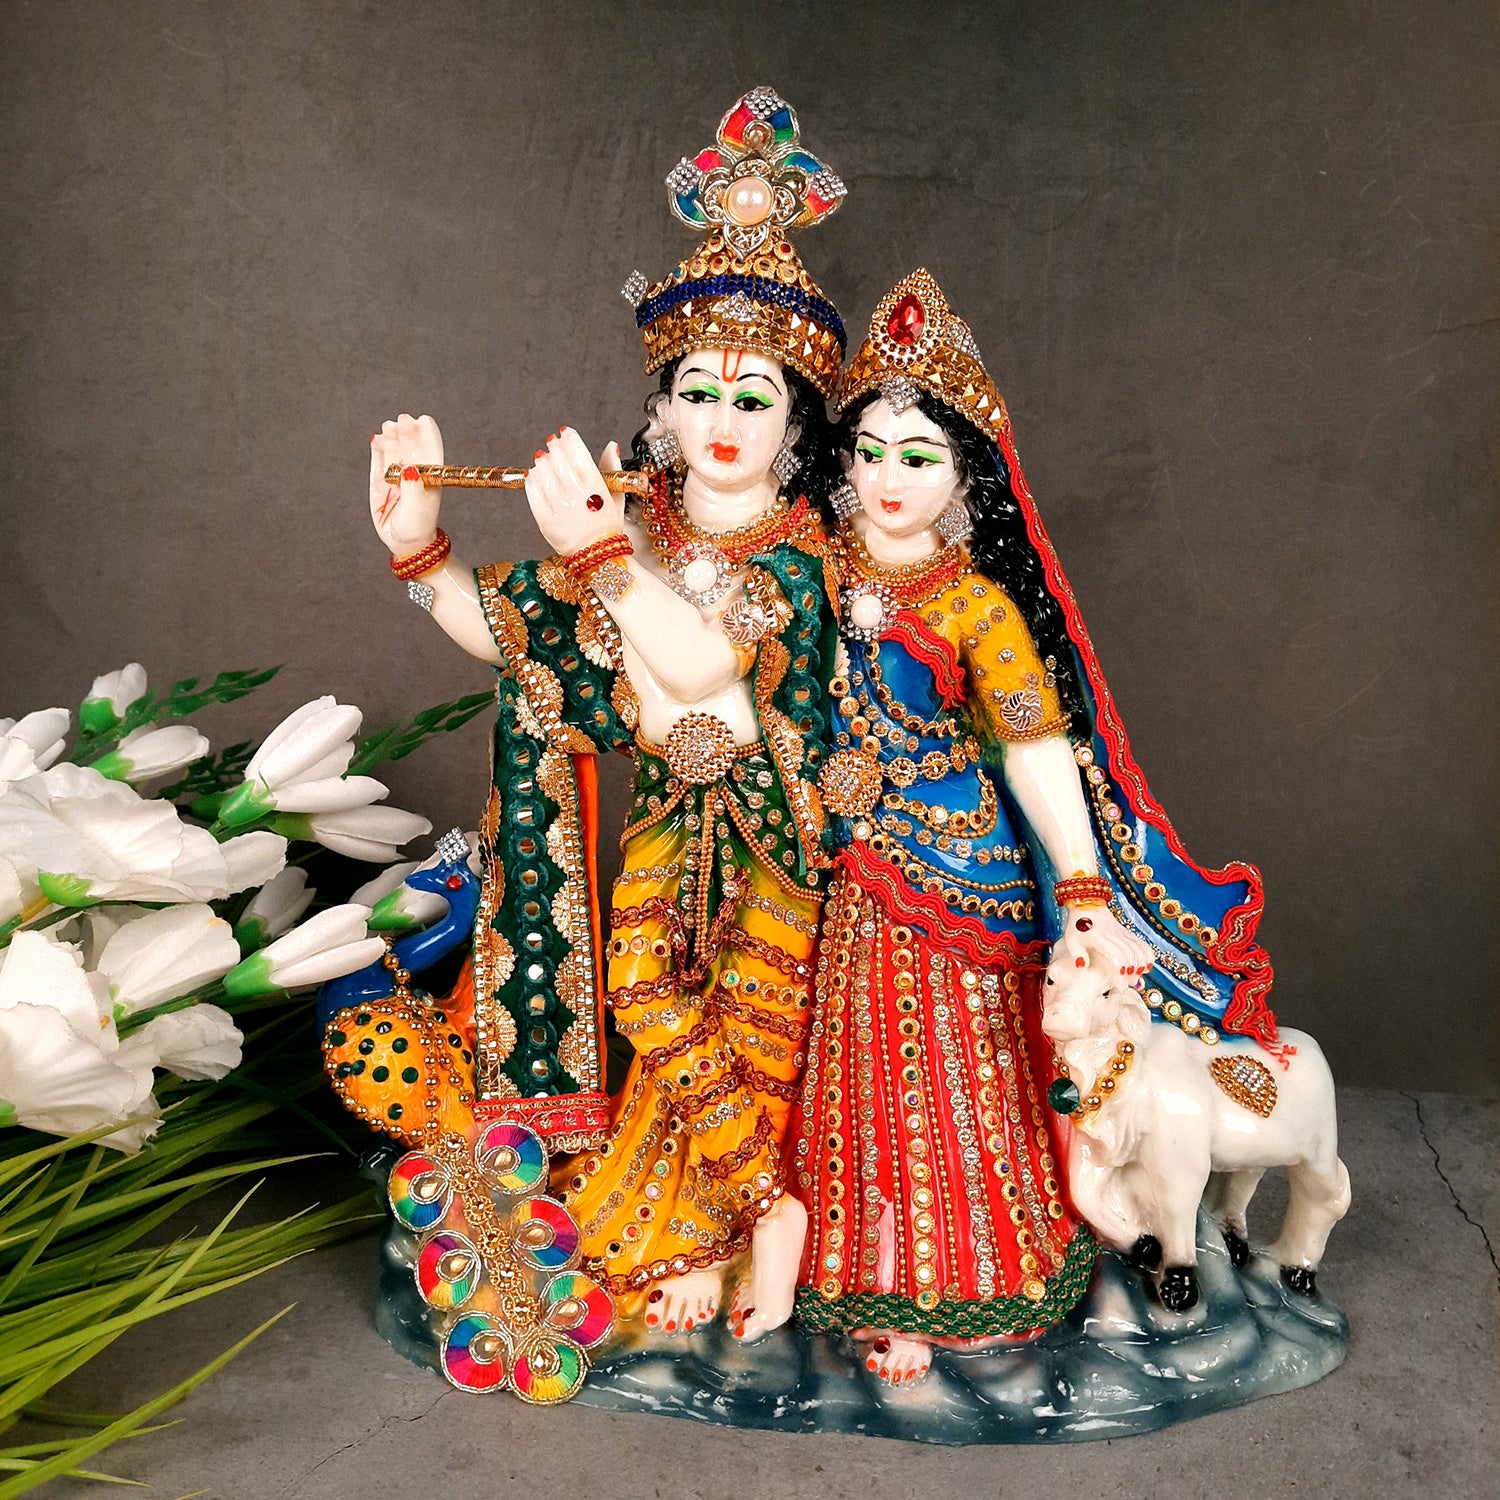 Lord Krishna Idol, 37 Cm Big Hand Painted Dust Marble Krishna Statue  Playing Flute, Murli Gopal, Govind, Hindu Marriage Anniversary Gift. - Etsy  | Lord krishna, Krishna statue, Krishna